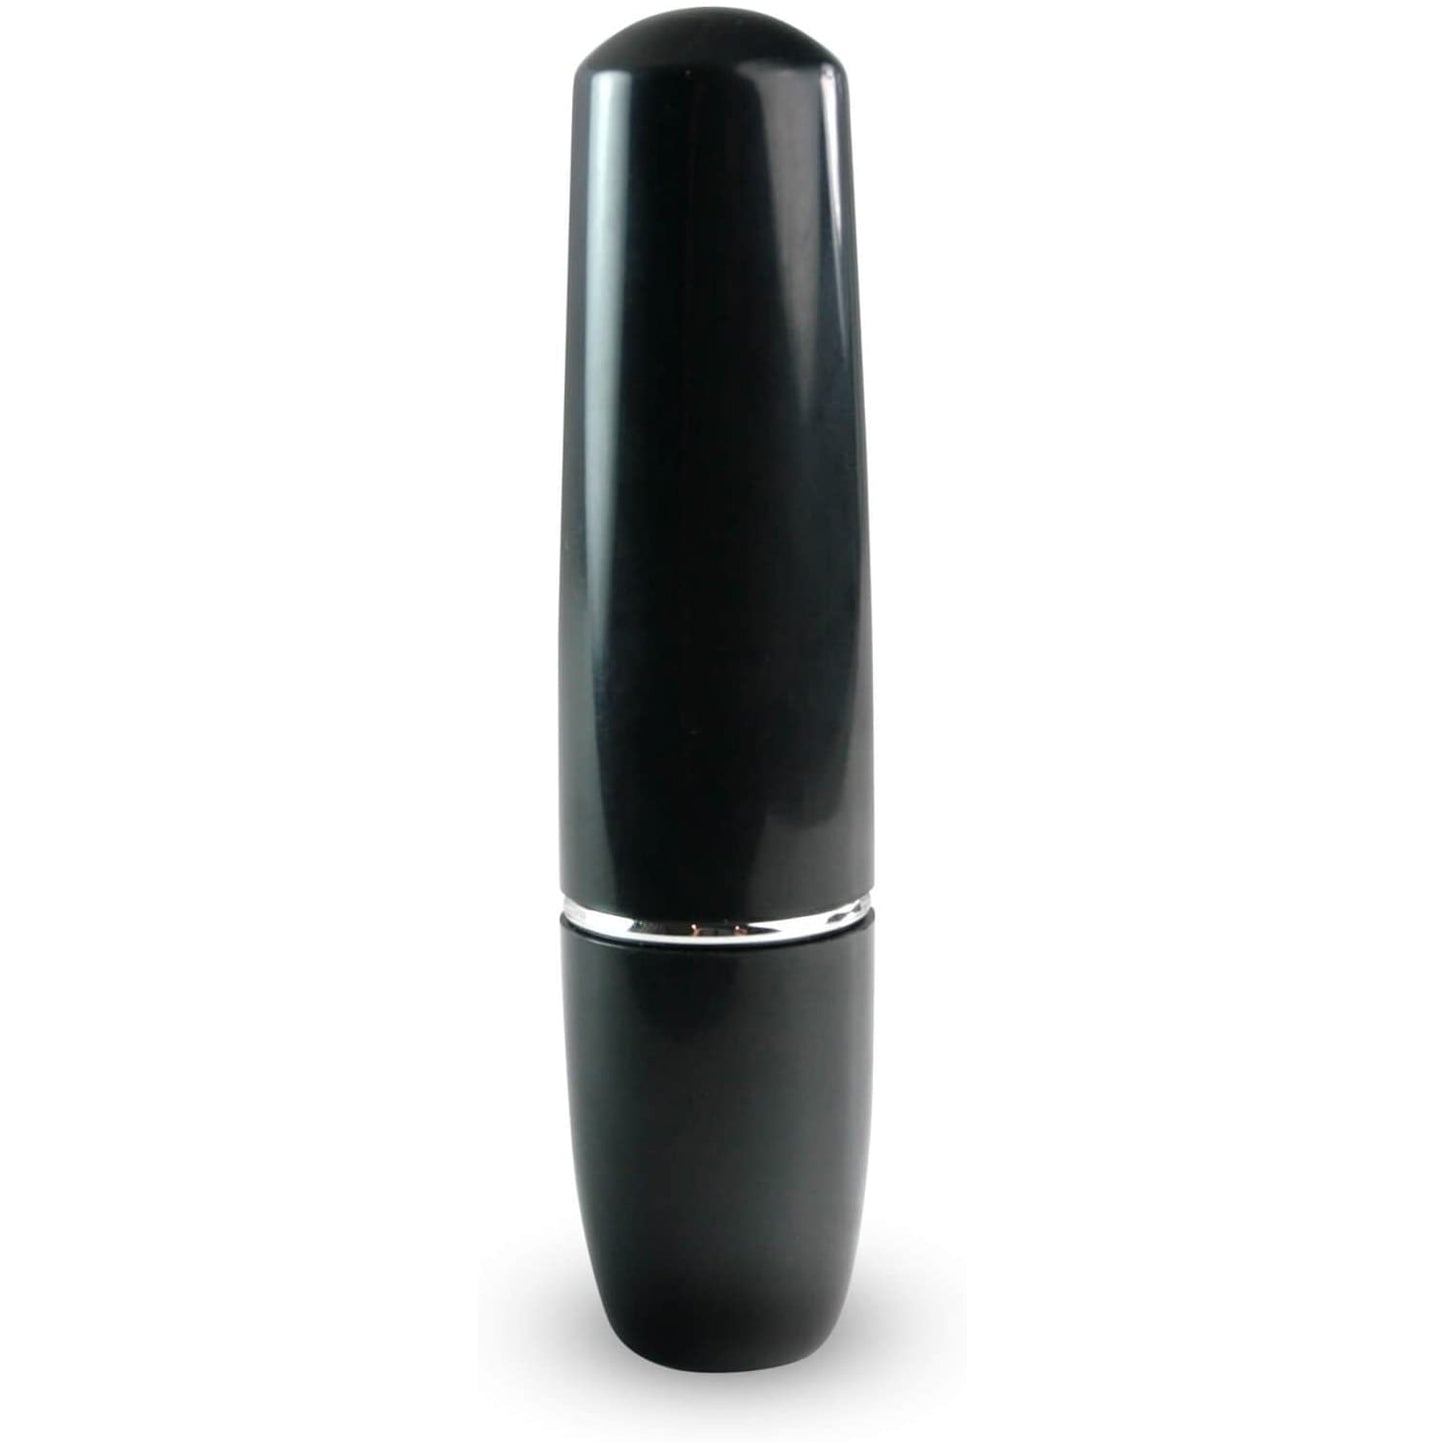 Discreet Mini Vibrator Lipsticks